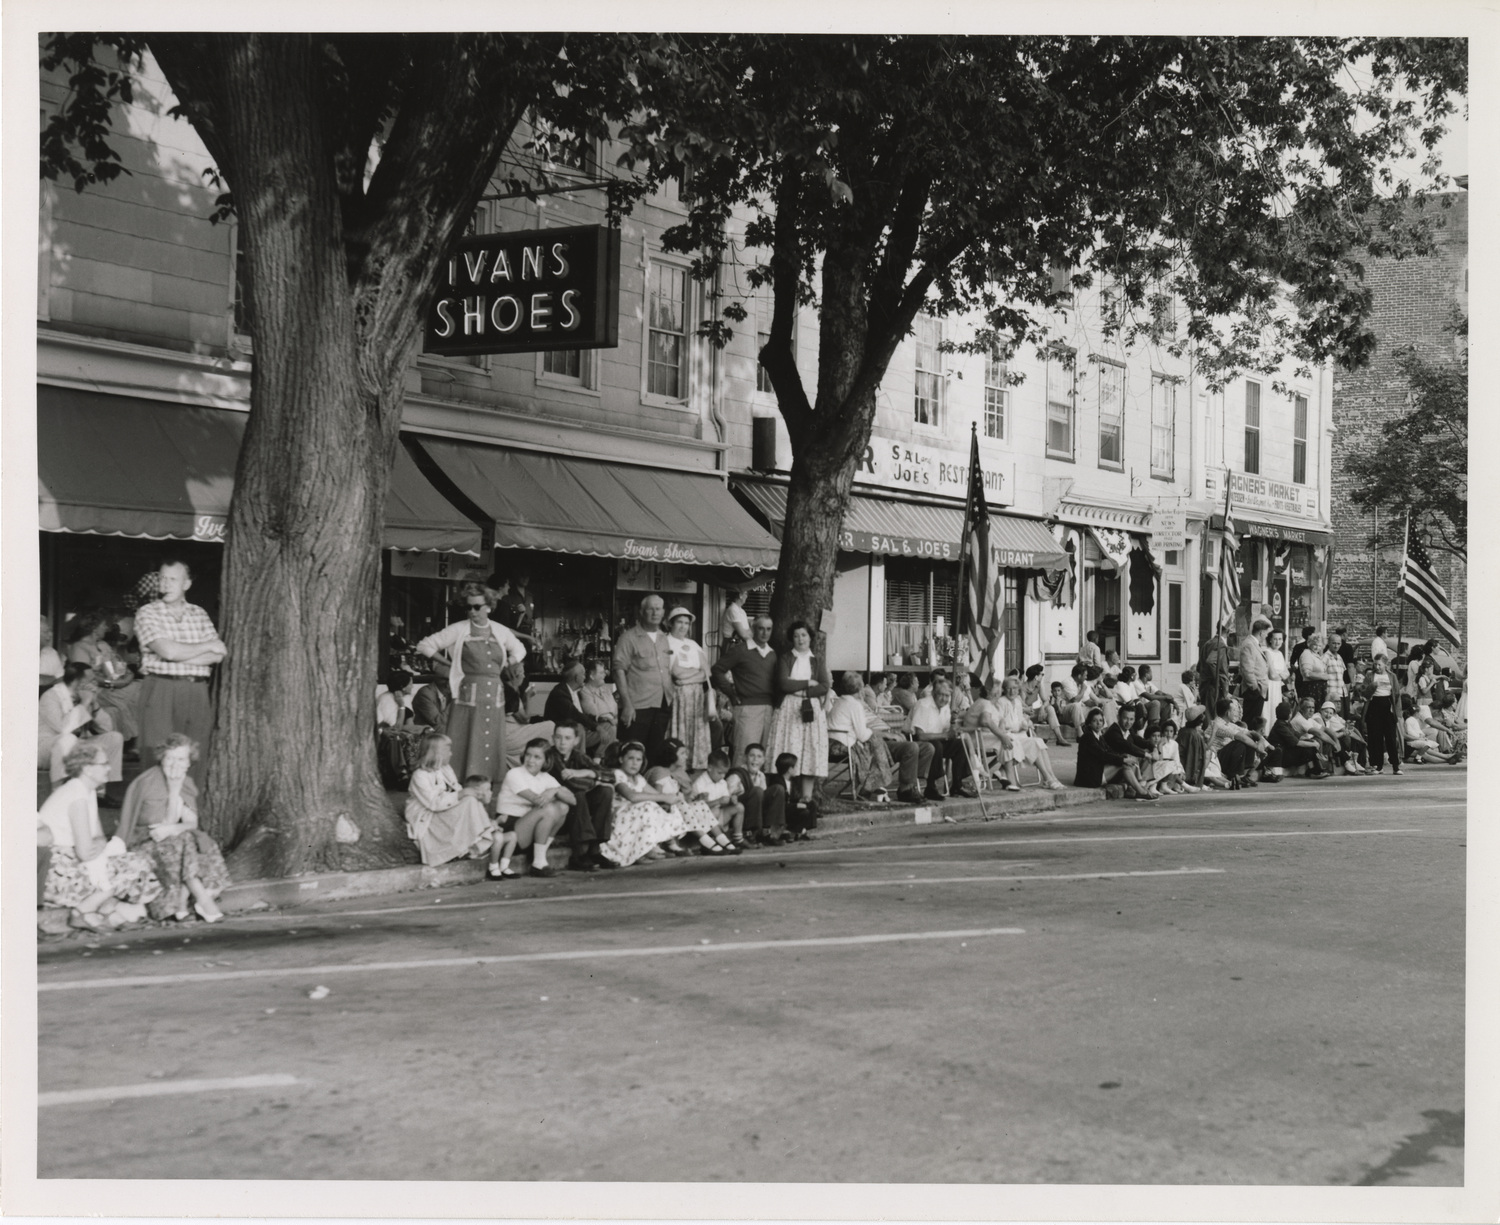 Mel Jackson's photo of parade goers on Sag Harbor's Main Street in the late 1950s. COURTESY JOHN JERMAIN MEMORIAL LIBRARY